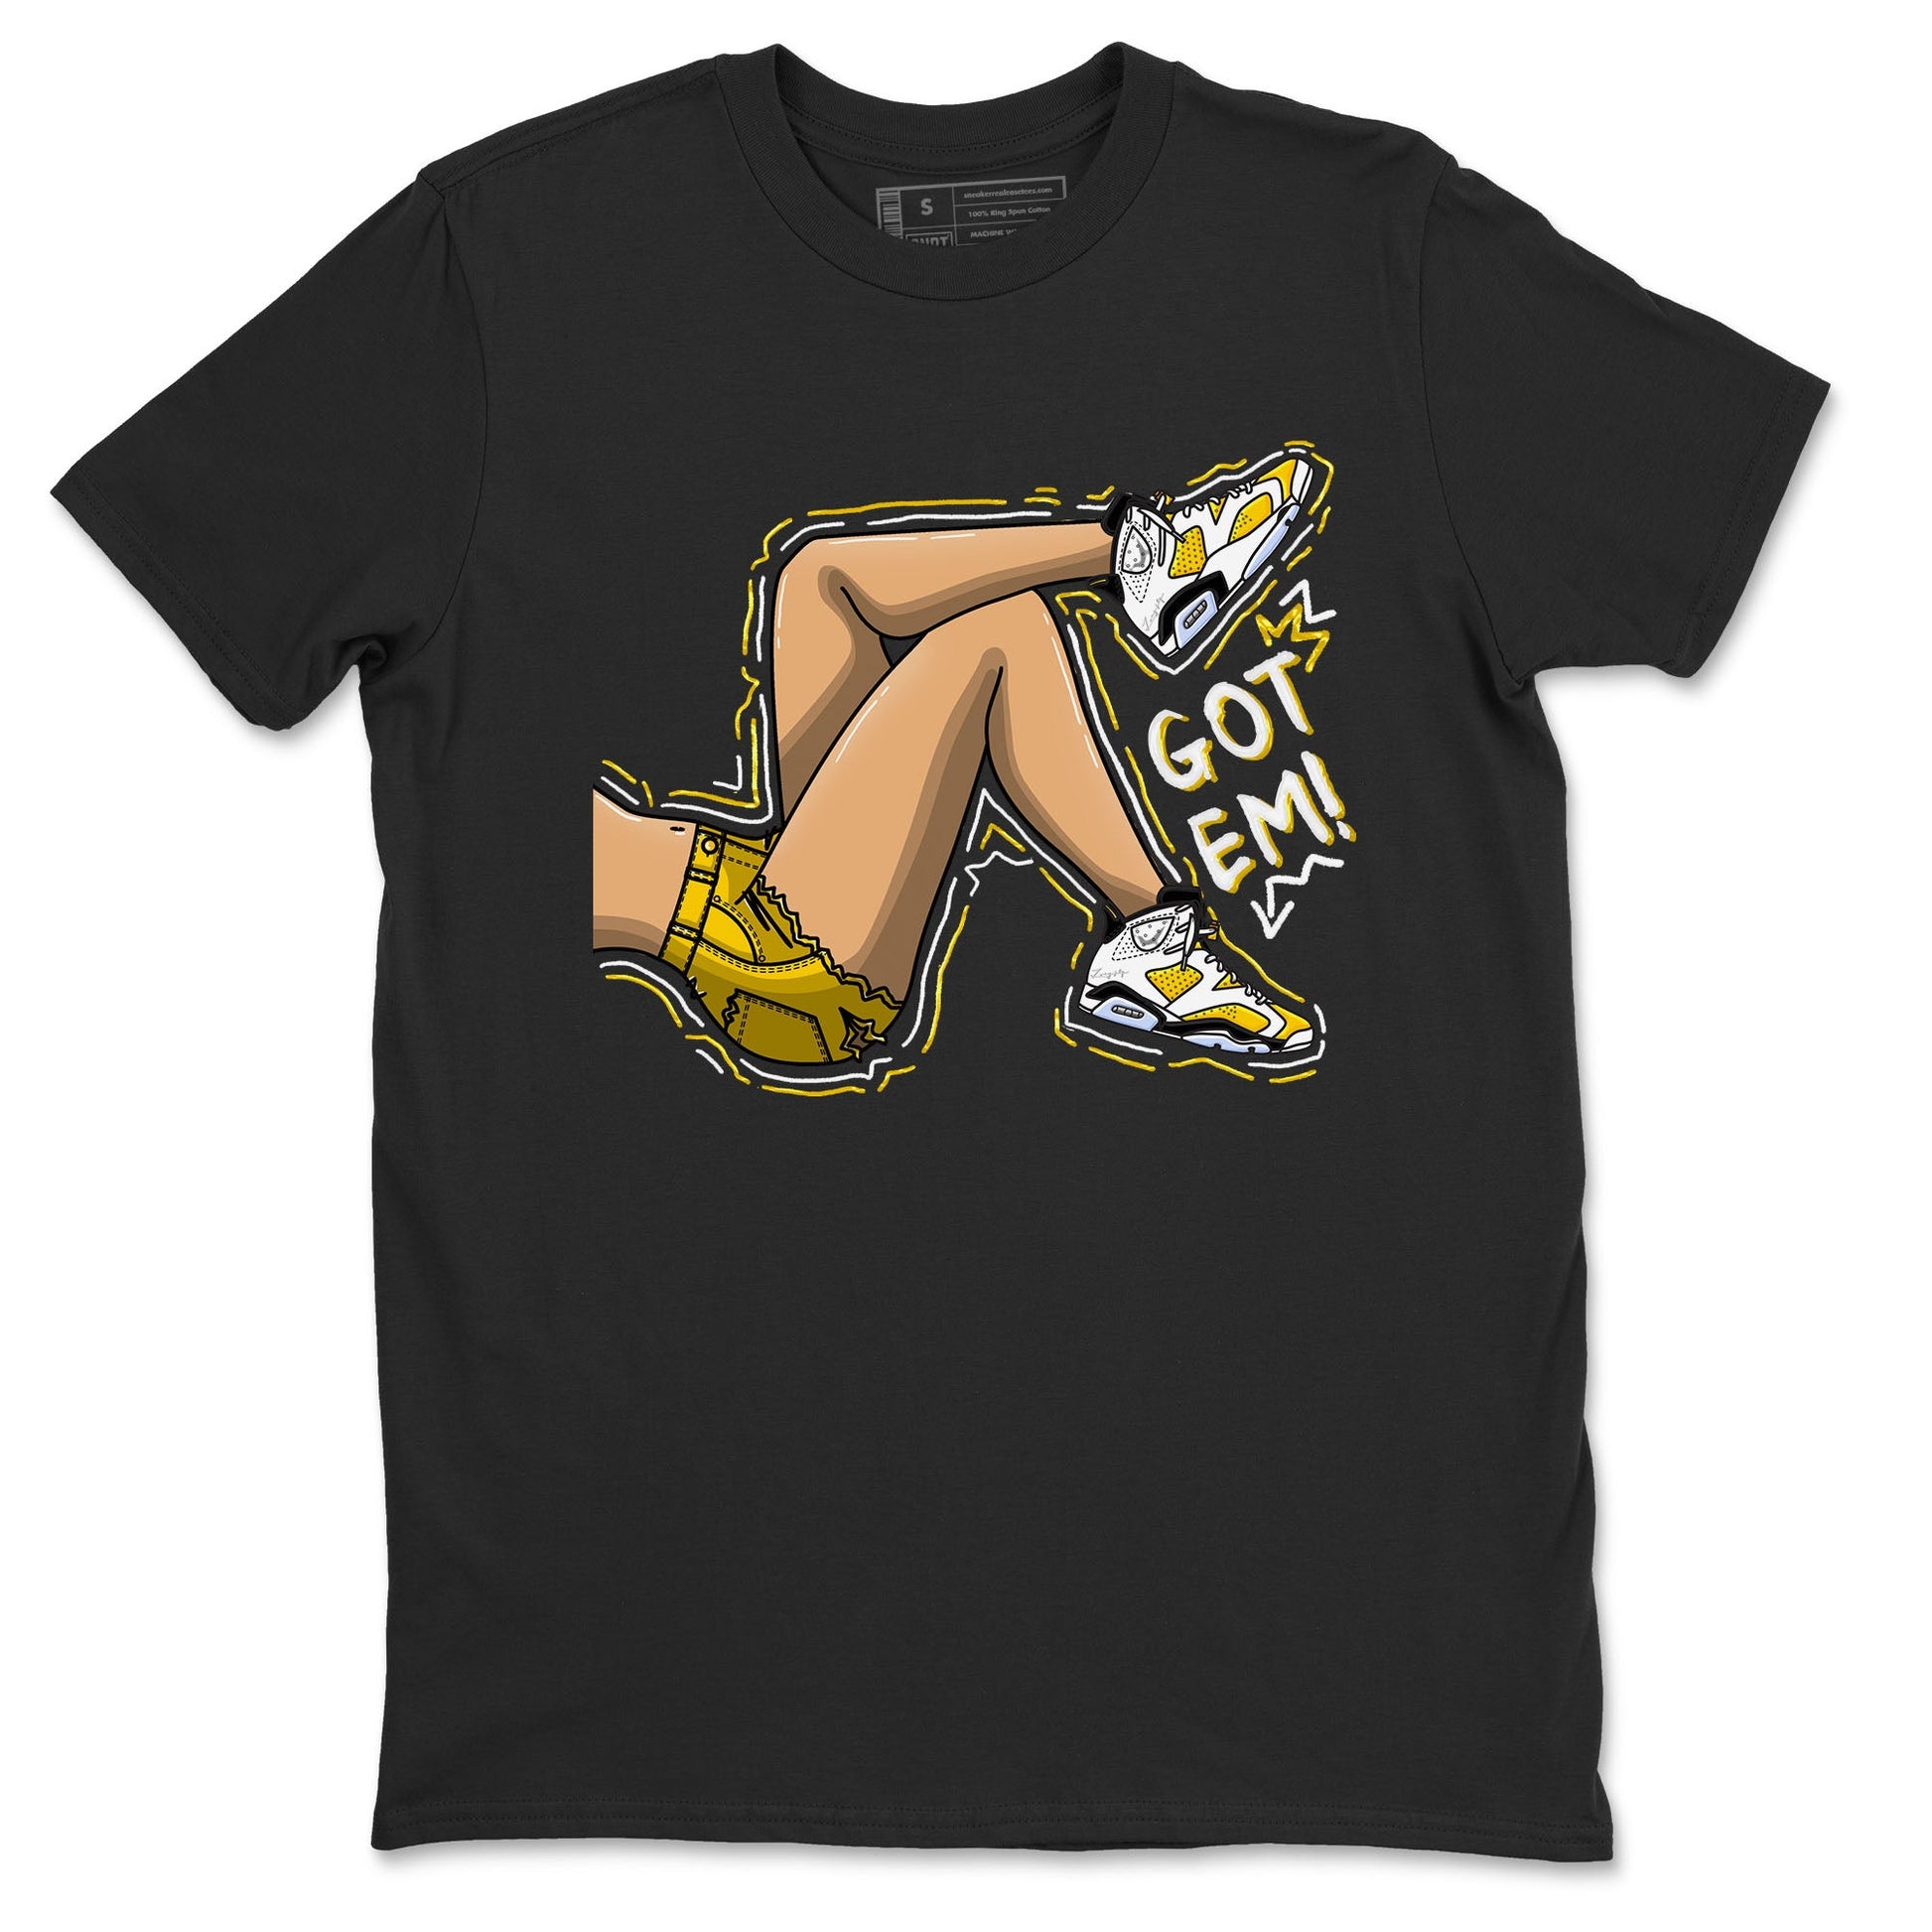 Got Em Legs sneaker match tees to Yellow Ochre 6s street fashion brand for shirts to match Jordans SNRT Sneaker Tees Air Jordan 6 Yellow Ochre unisex t-shirt Black 2 unisex shirt